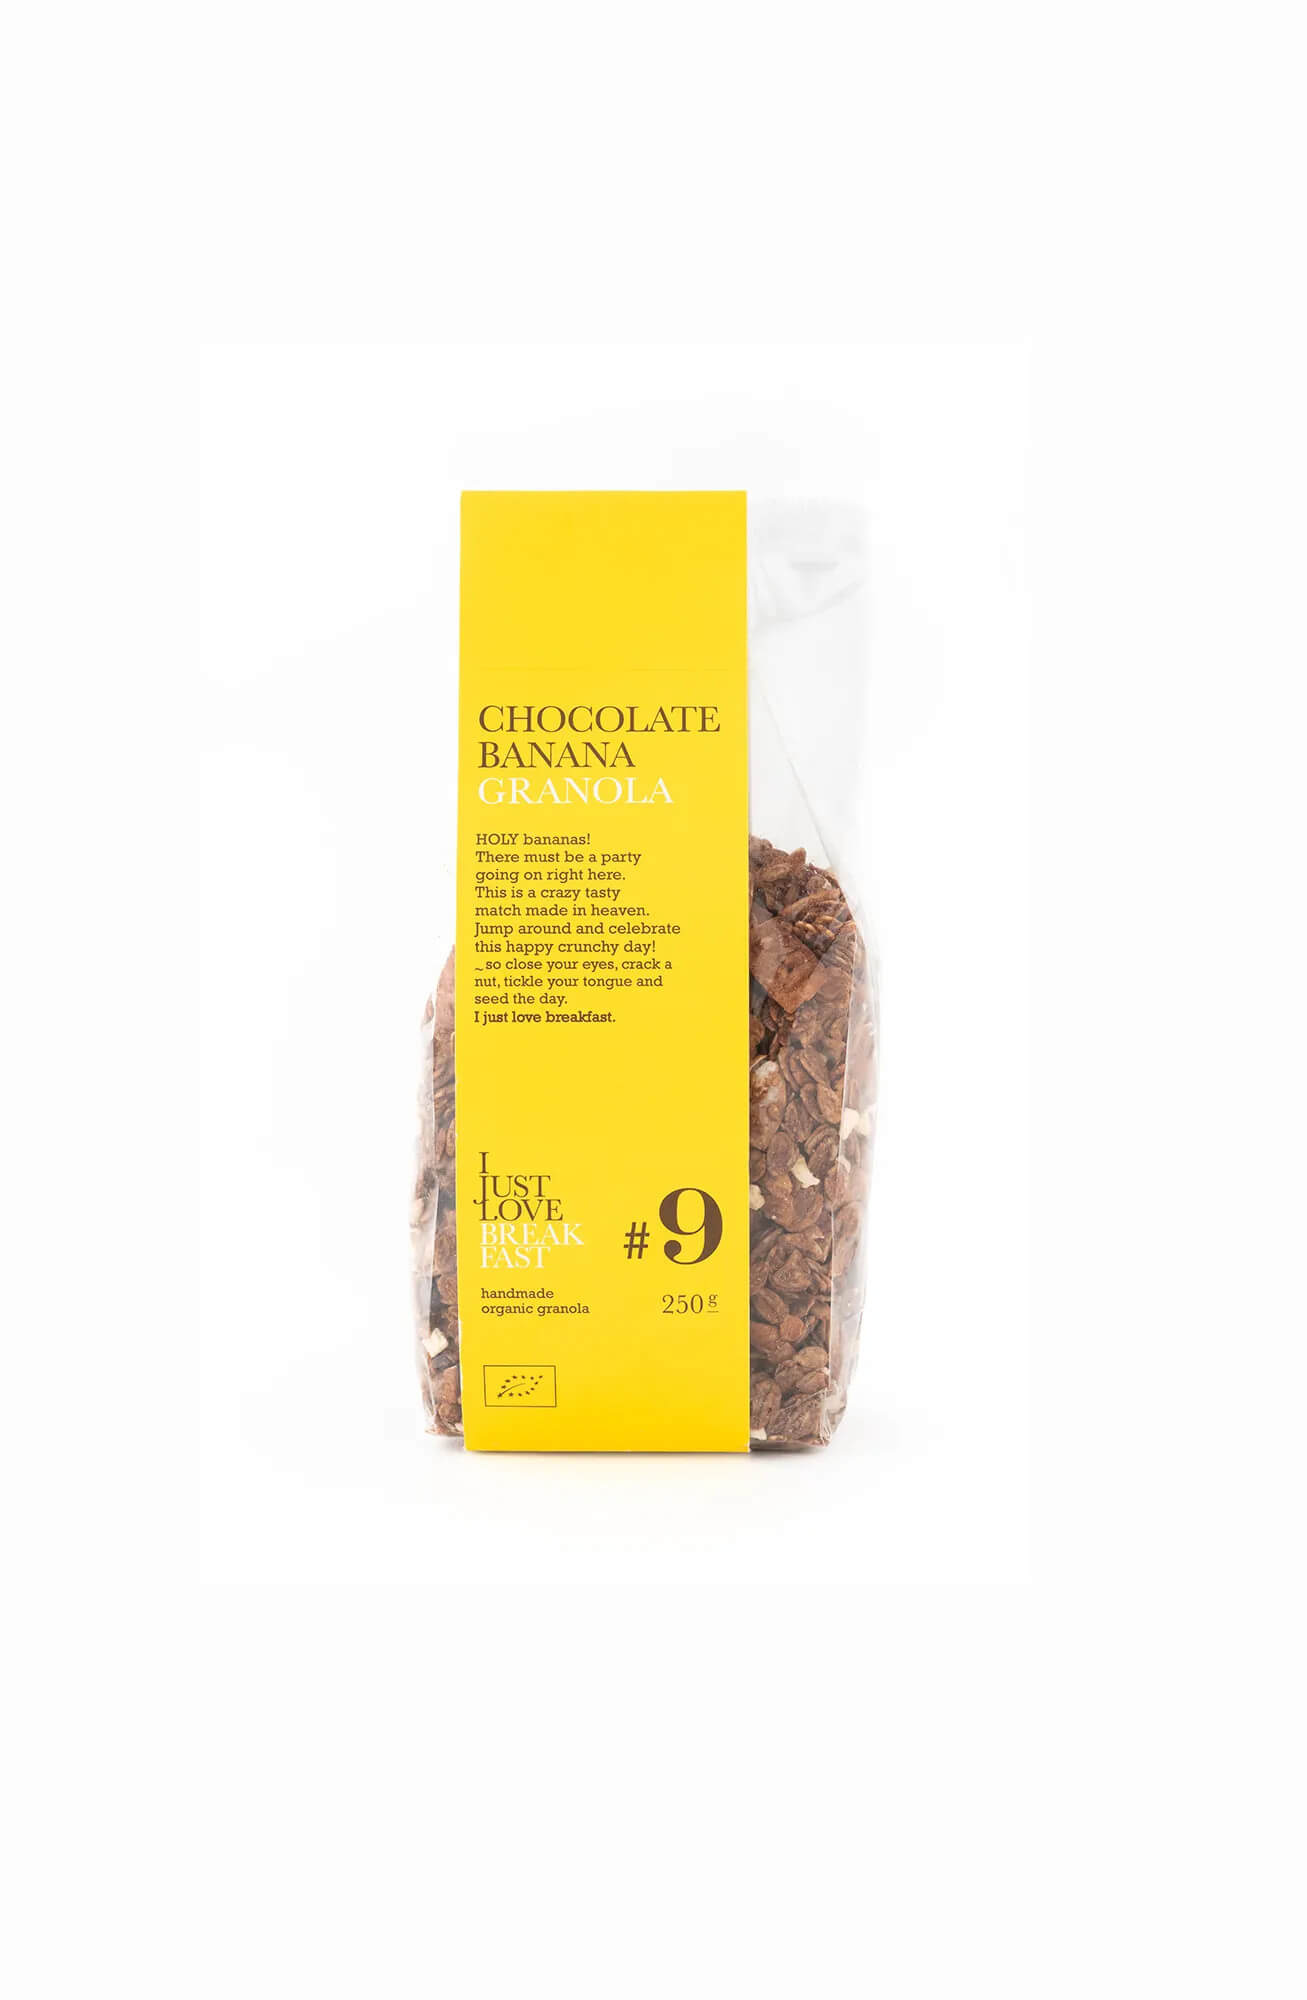 I Just Love Breakfast #9 chocolade banaan granola bio 5kg